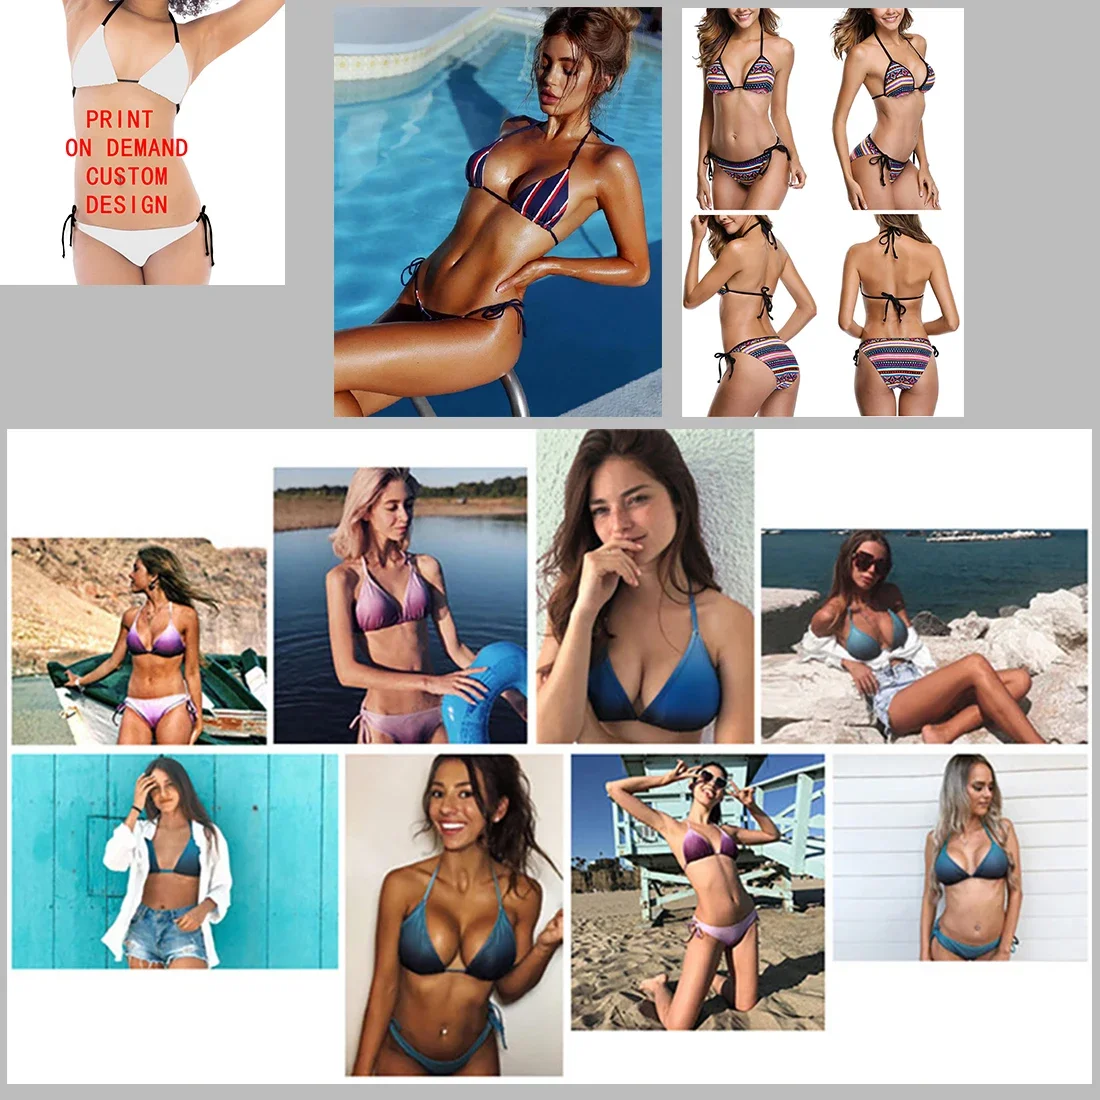 Print On Demand Customized Public Custom Images Picture DIY Dropshipping Sexy Bikini Set Swimsuit Women Pool Swimwear Breathable